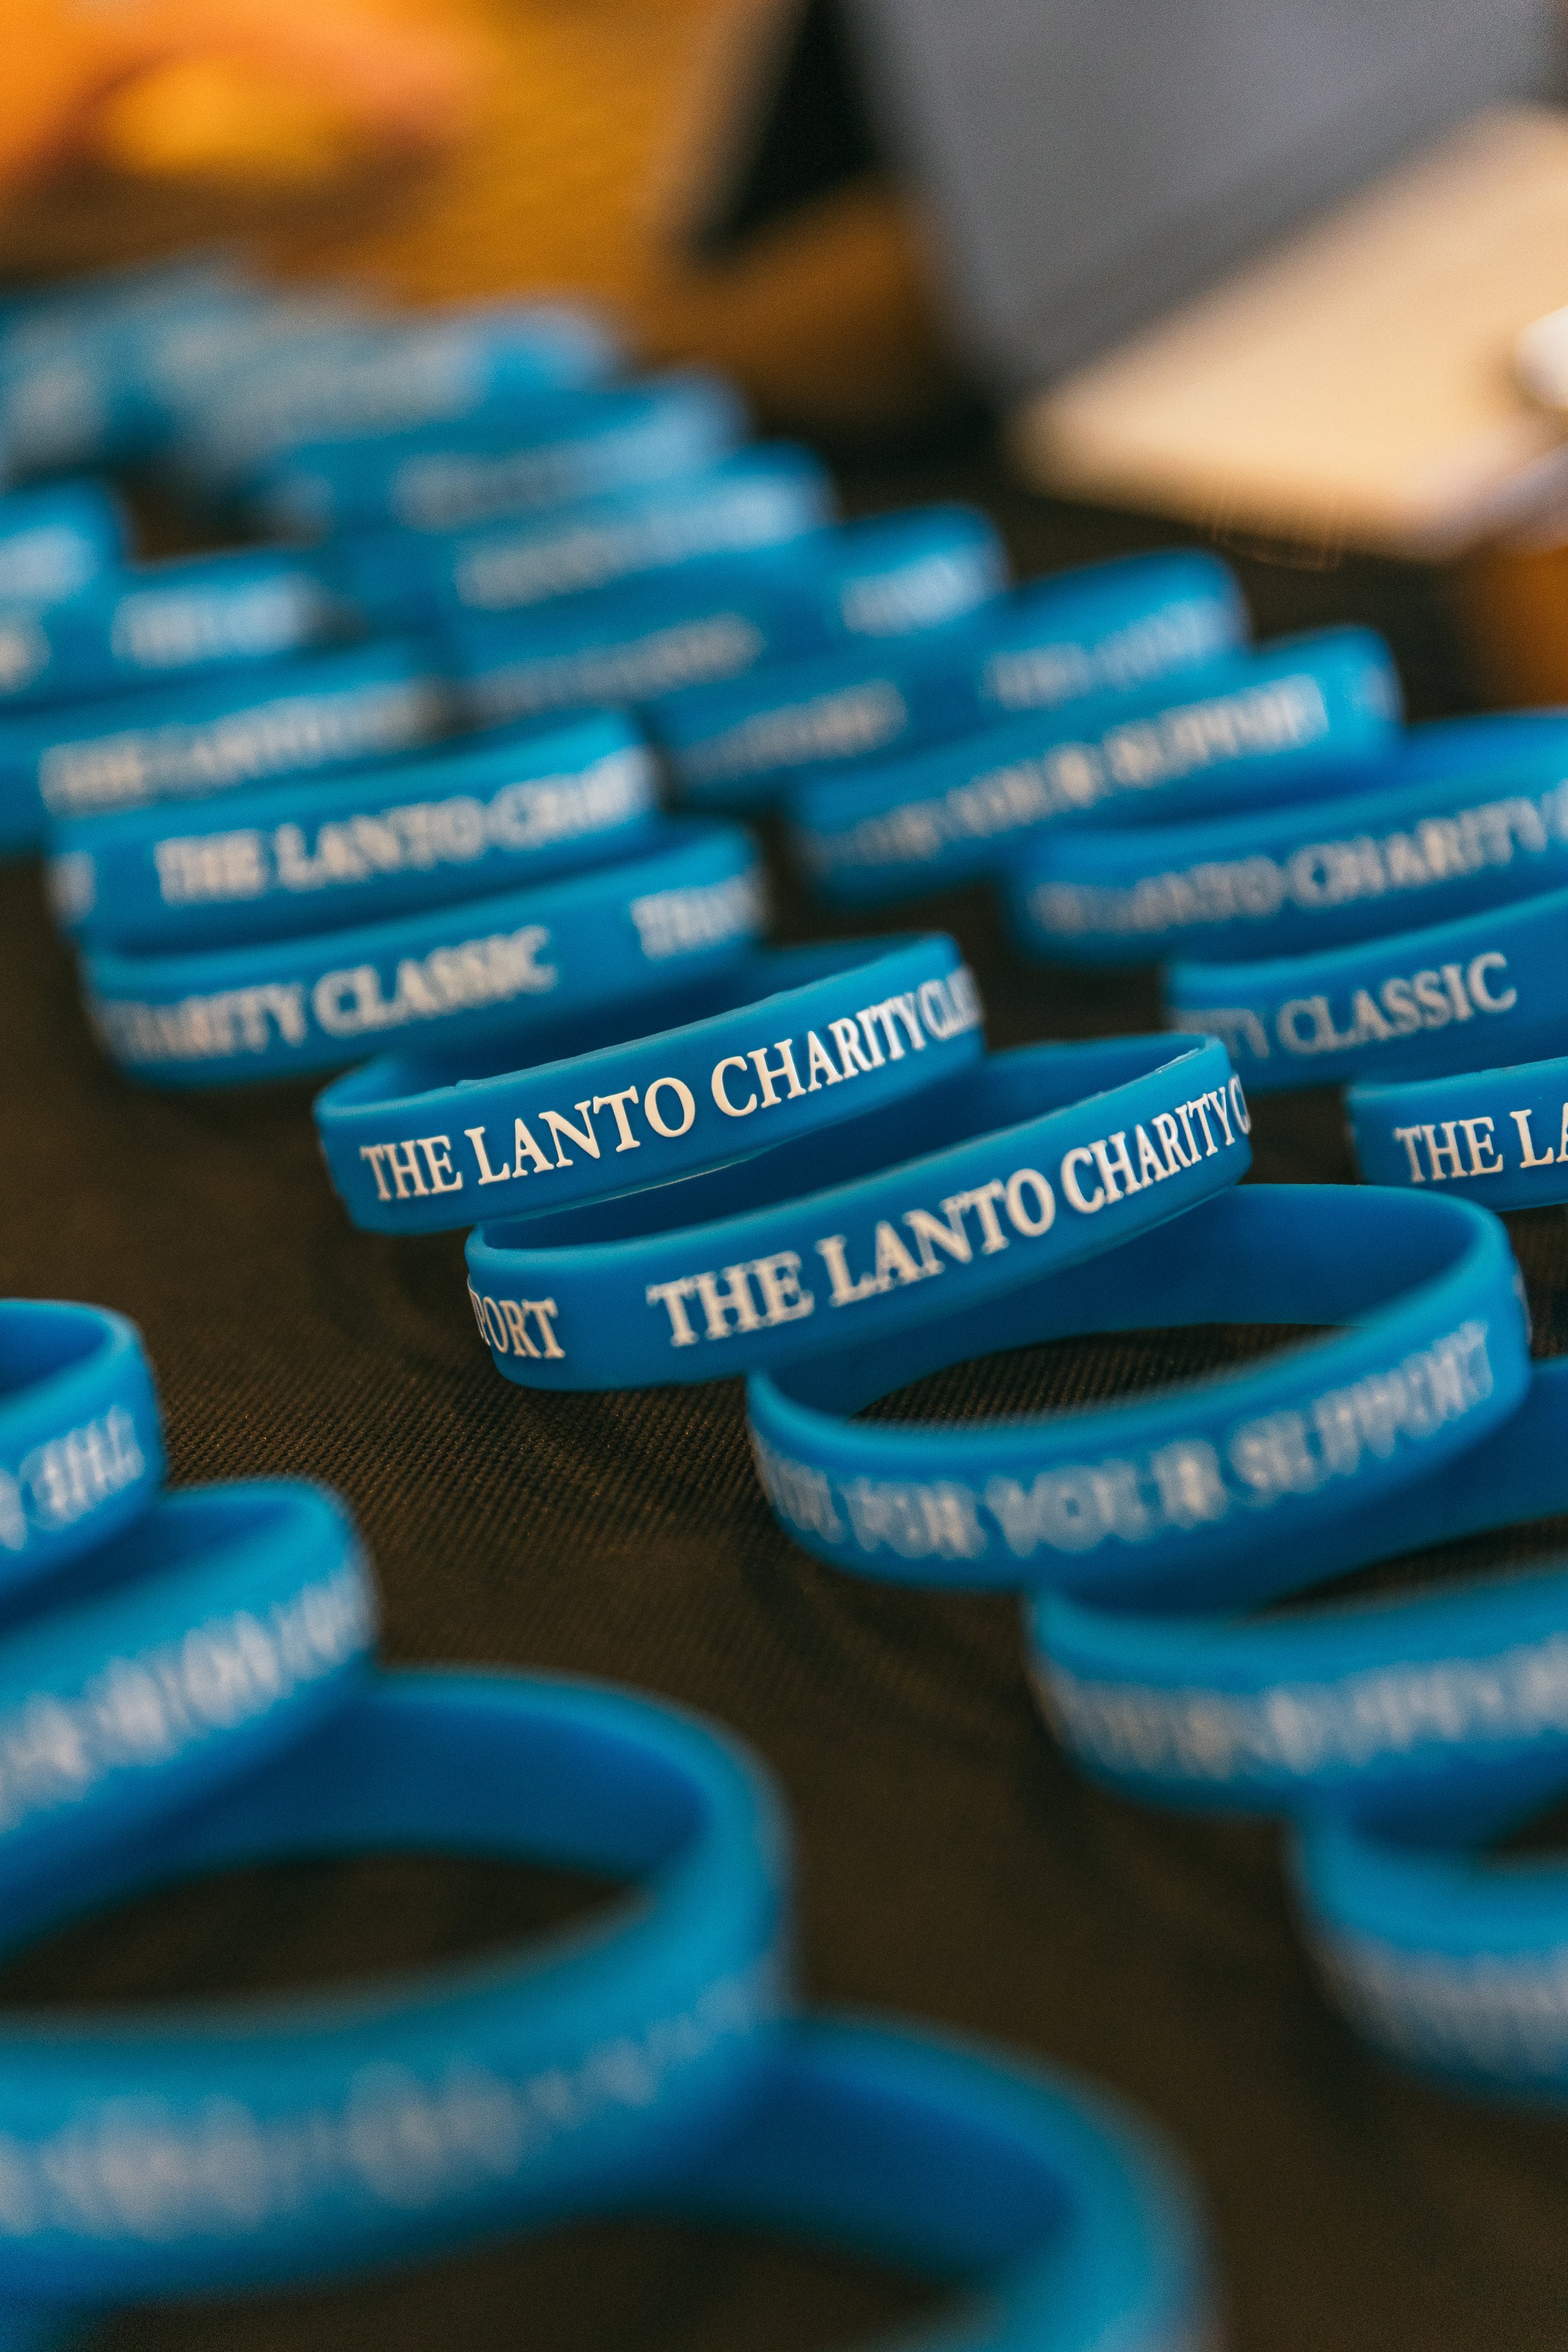 Lanto Charity Classic bracelets.